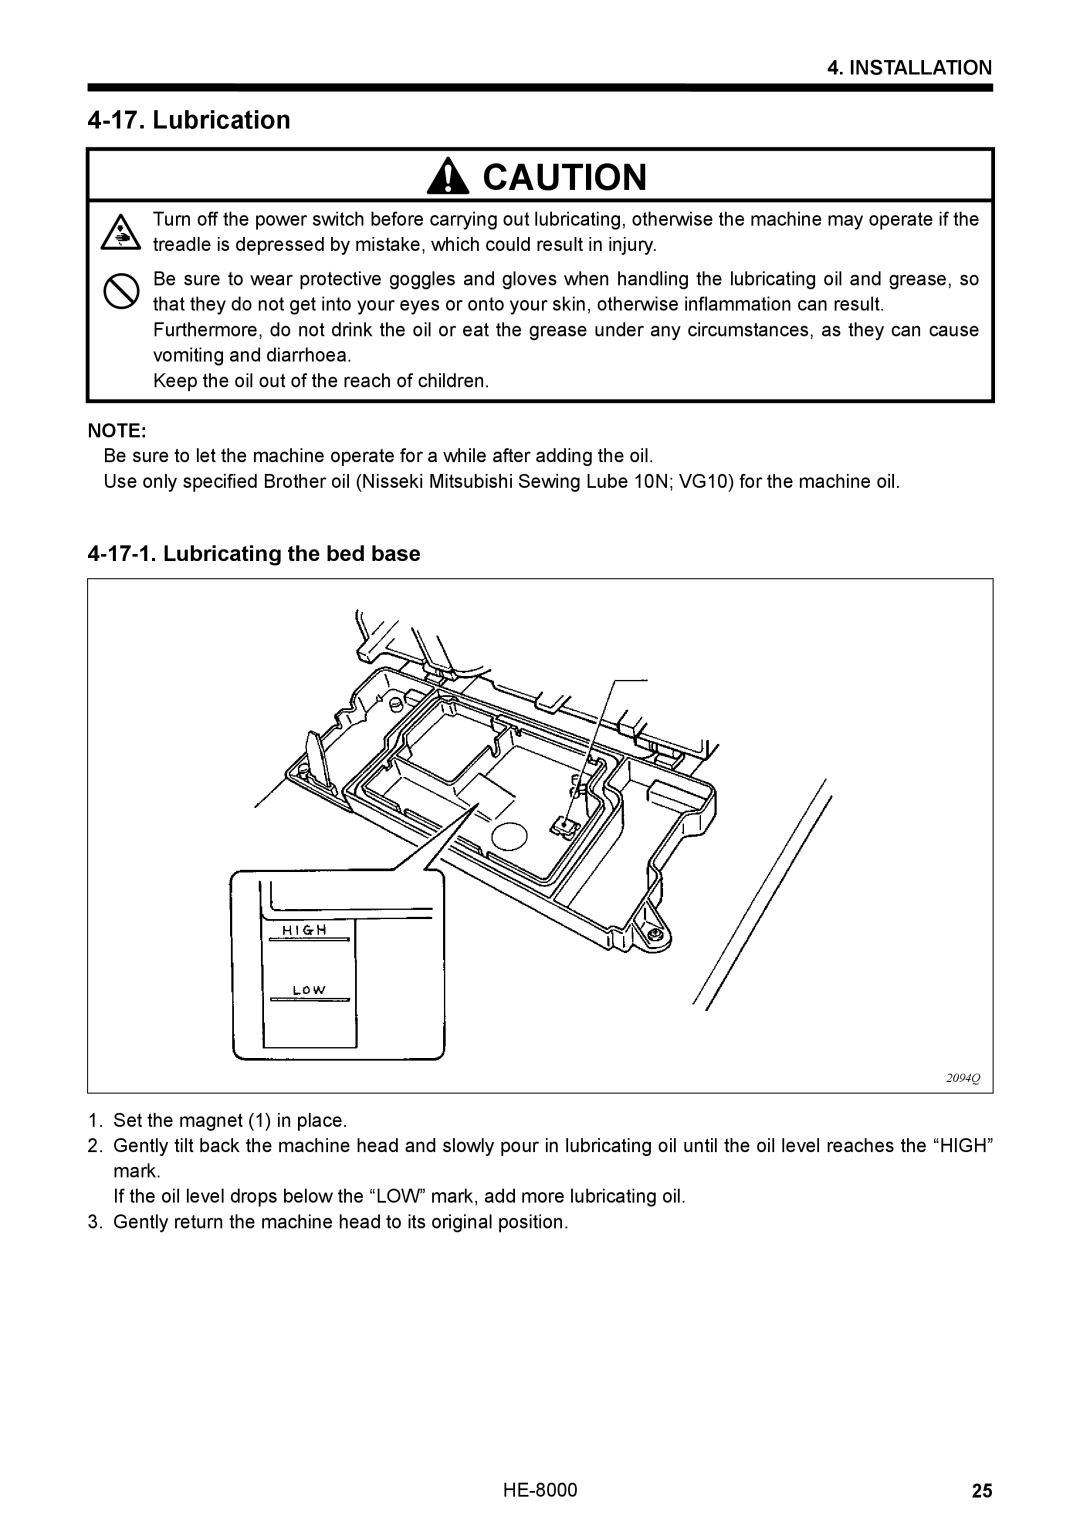 Motorola LH4-B800E, HE-8000 I instruction manual Lubrication, Lubricating the bed base 